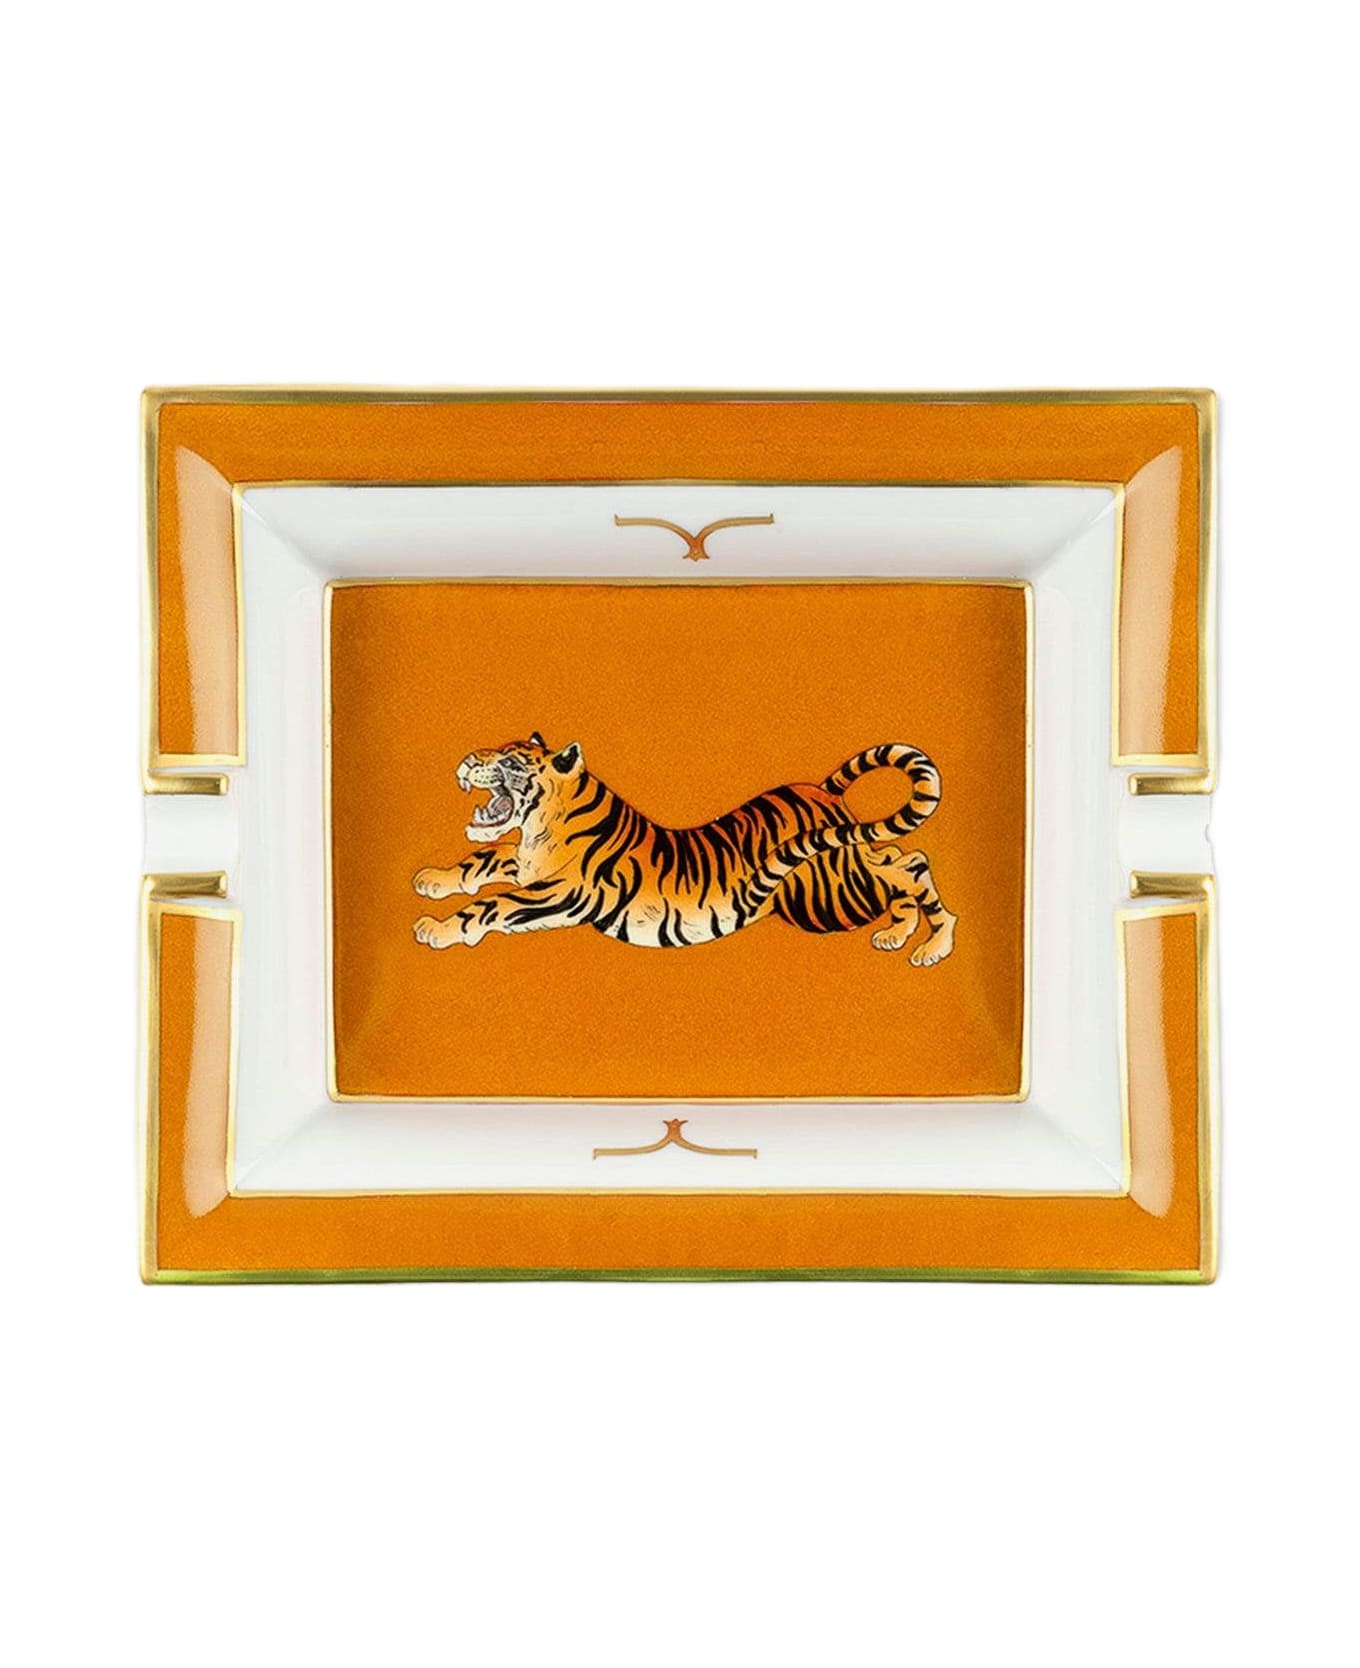 Larusmiani Ashtray 'tigre' Tray - Orange トレー